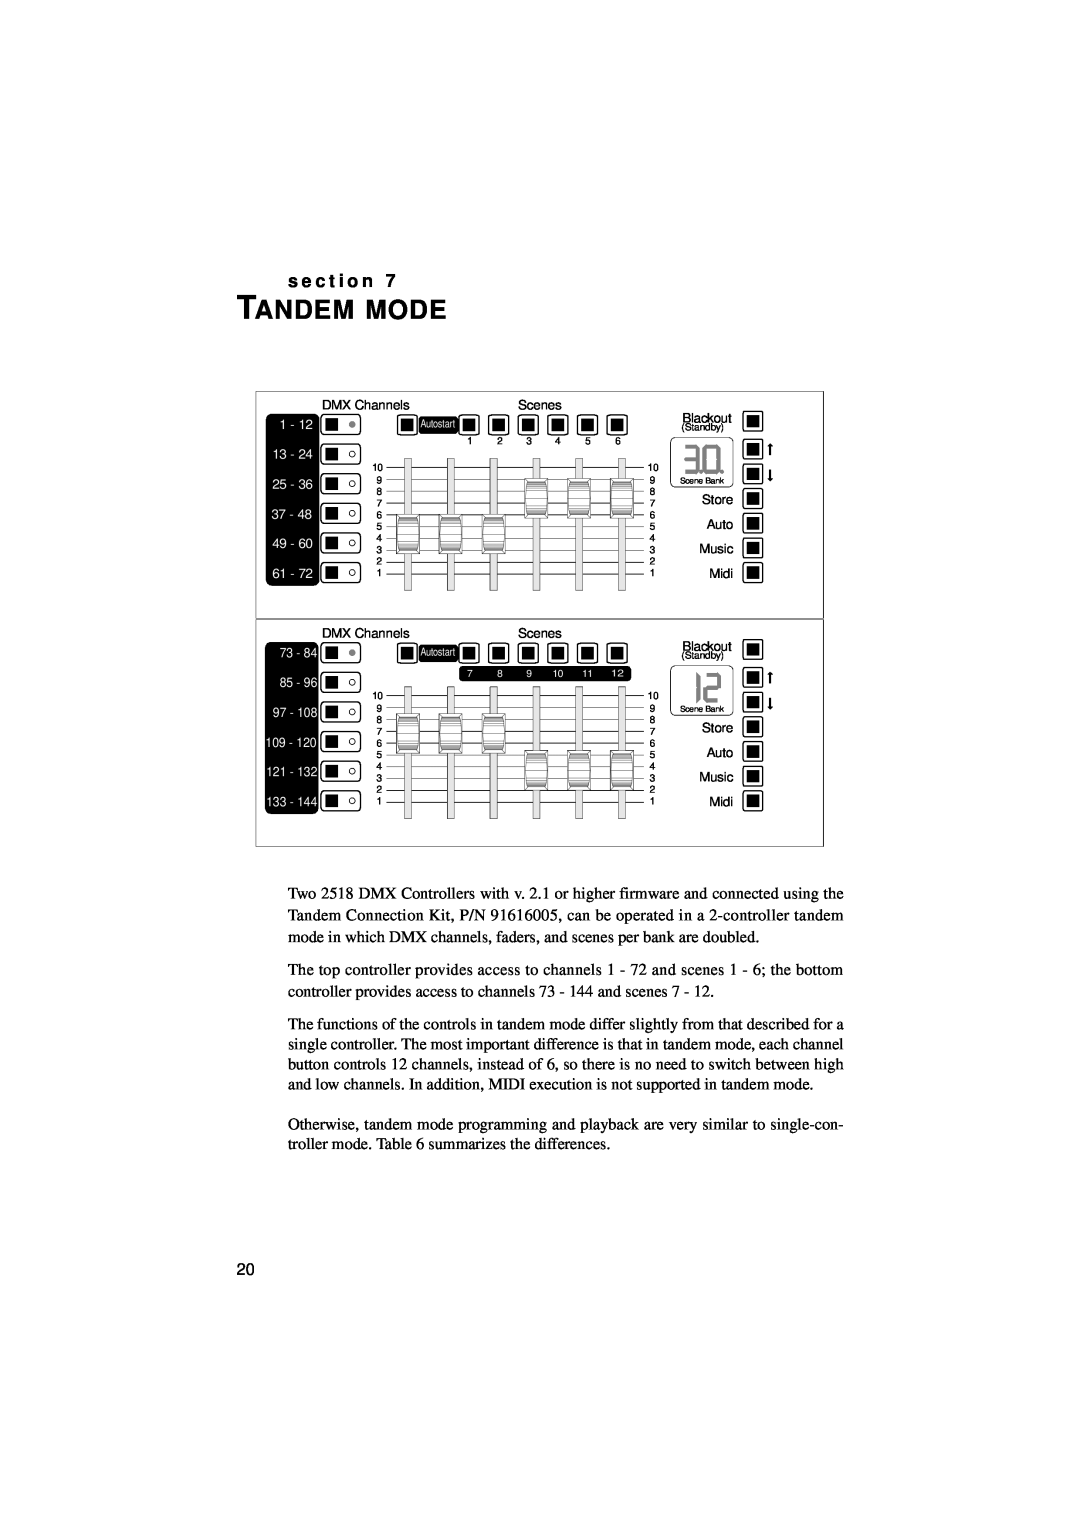 Martin Fireplaces 2518 user manual Tandem Mode, s e c t i o n 